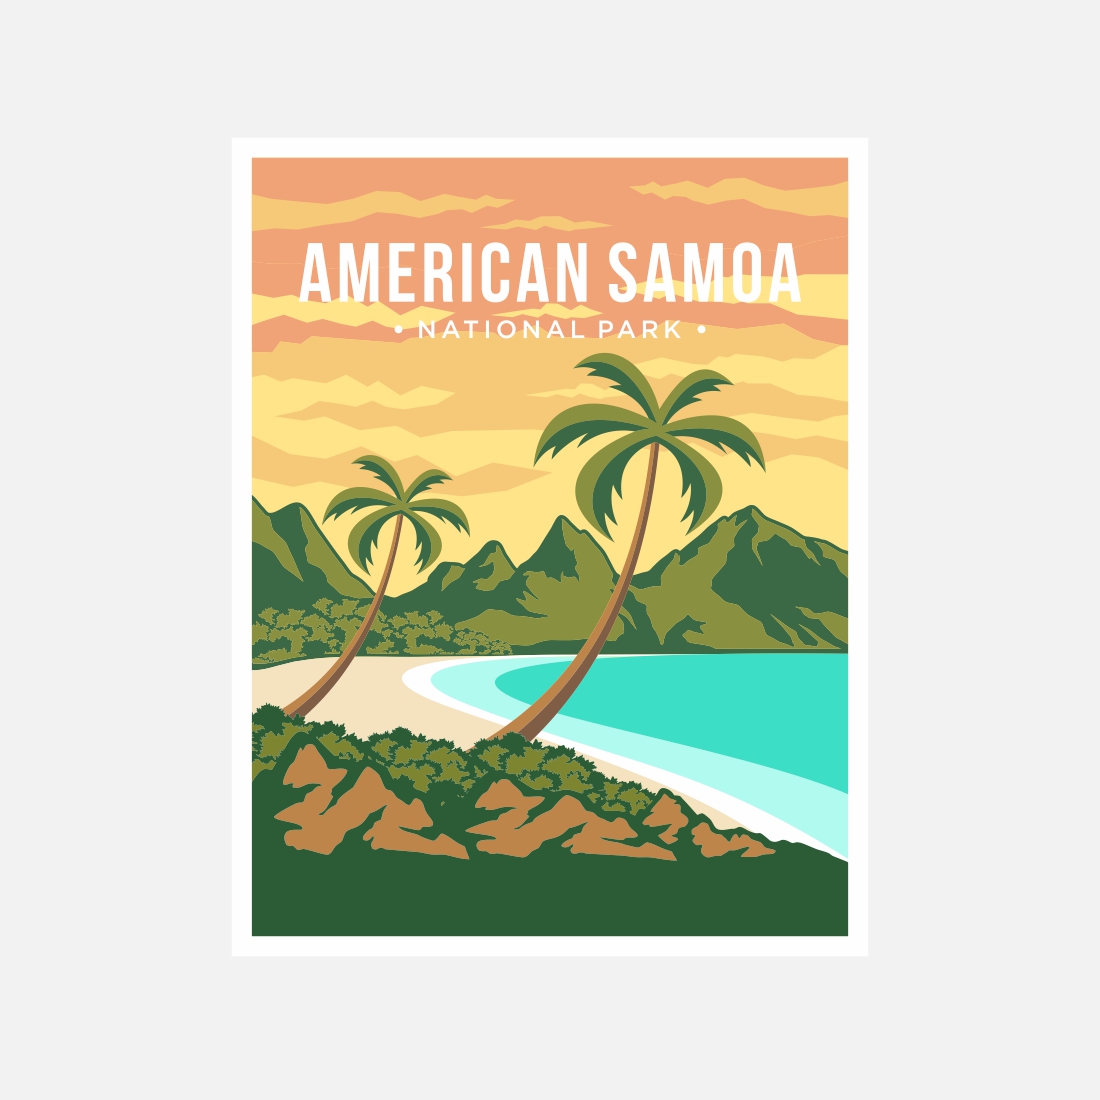 American Samoa National Park poster vector illustration design - $8 cover image.